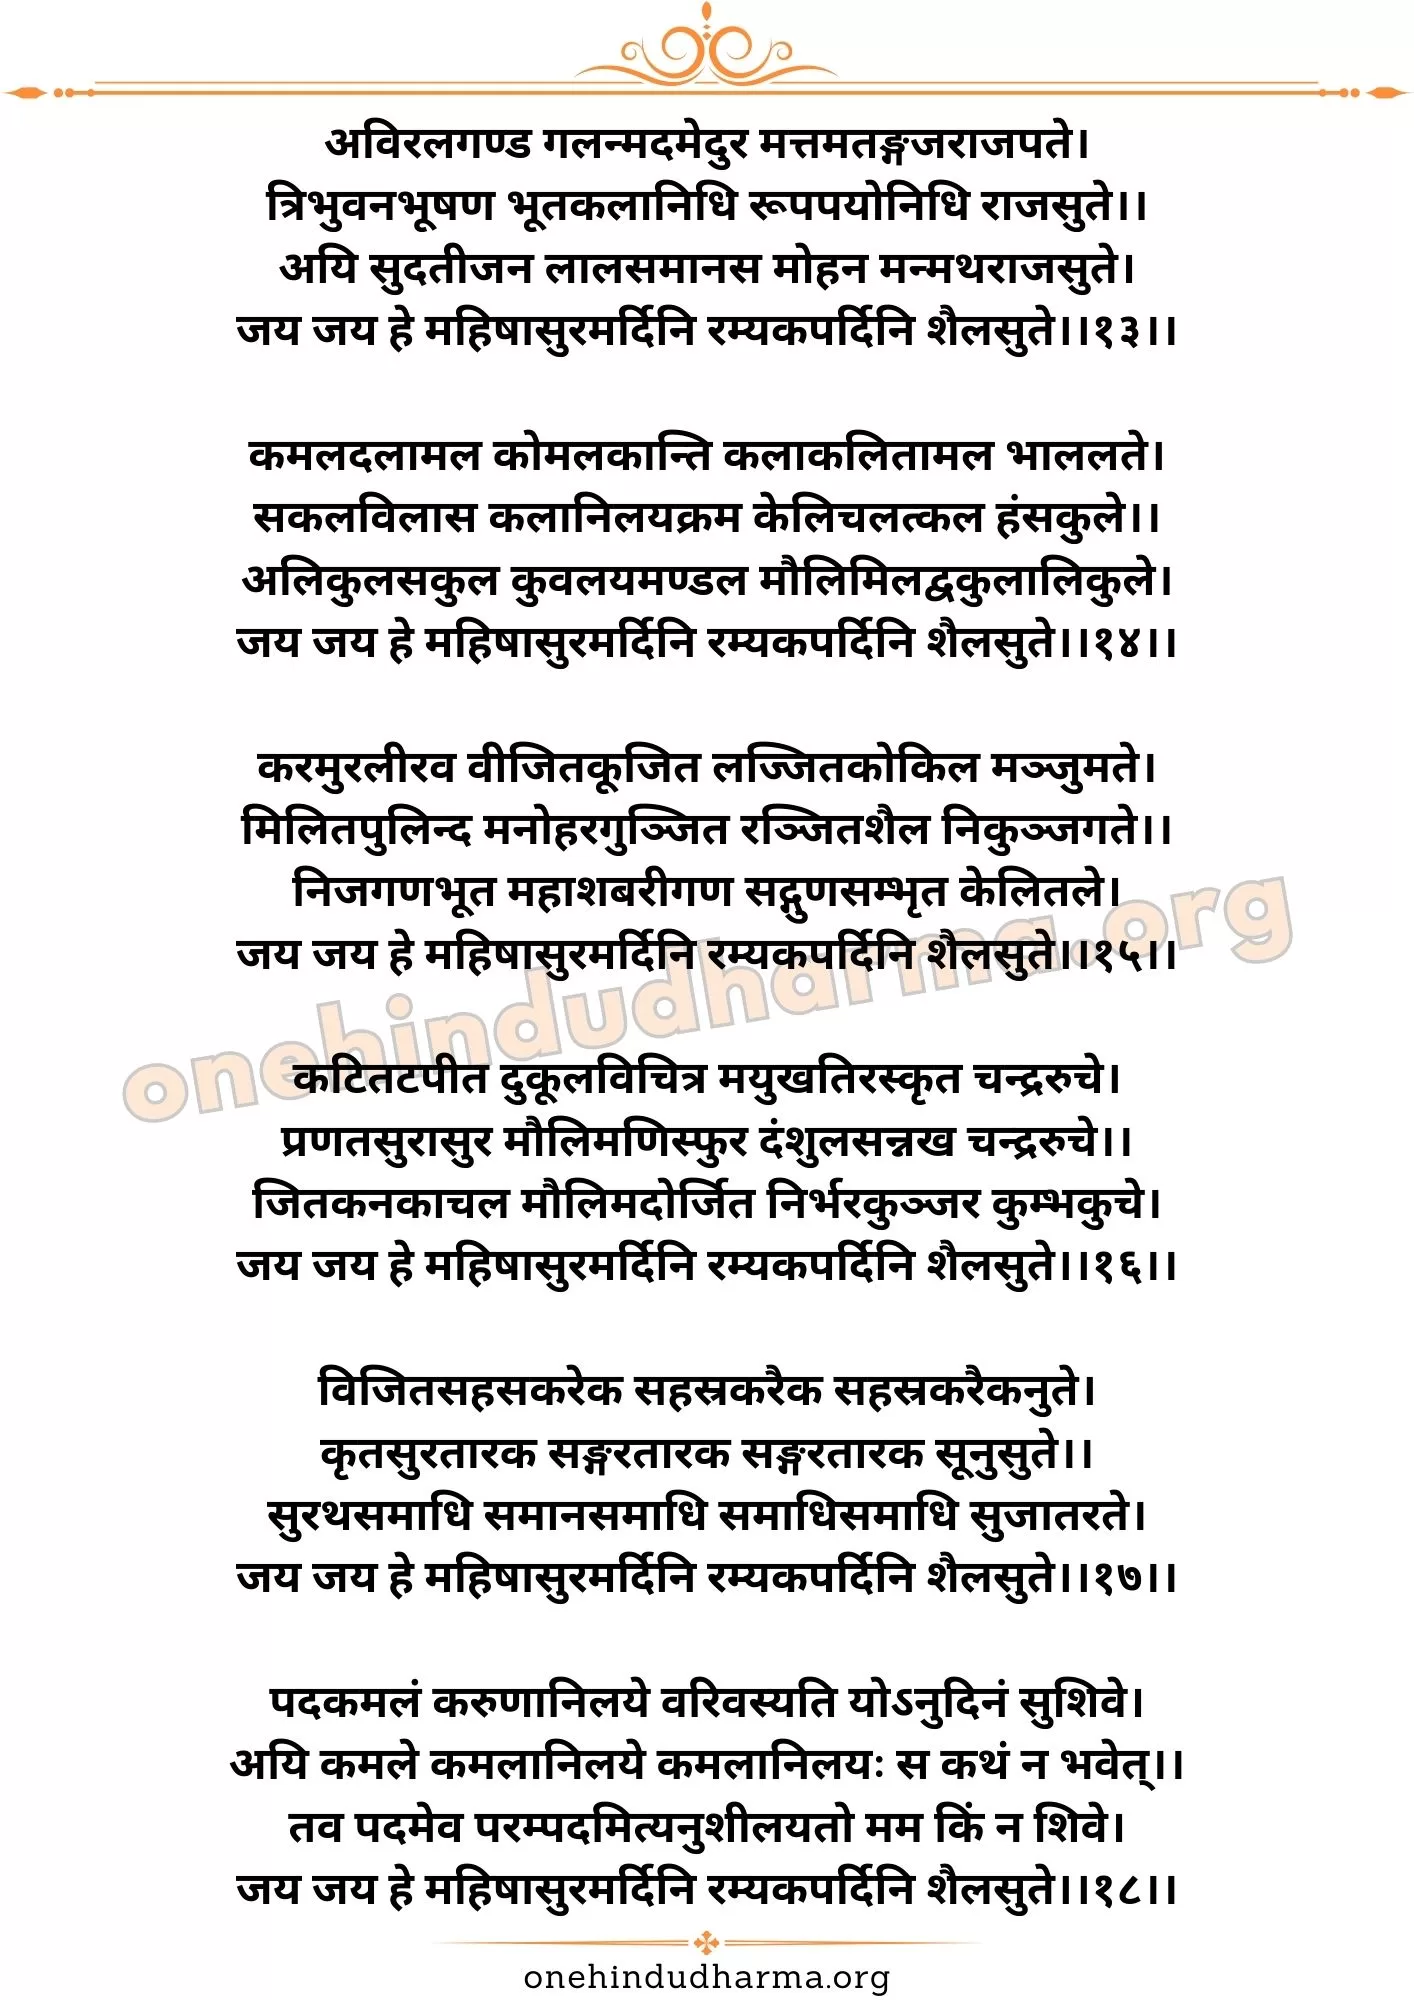 महिषासुरमर्दिनी स्तोत्र (Mahishasurmardini Stotra)